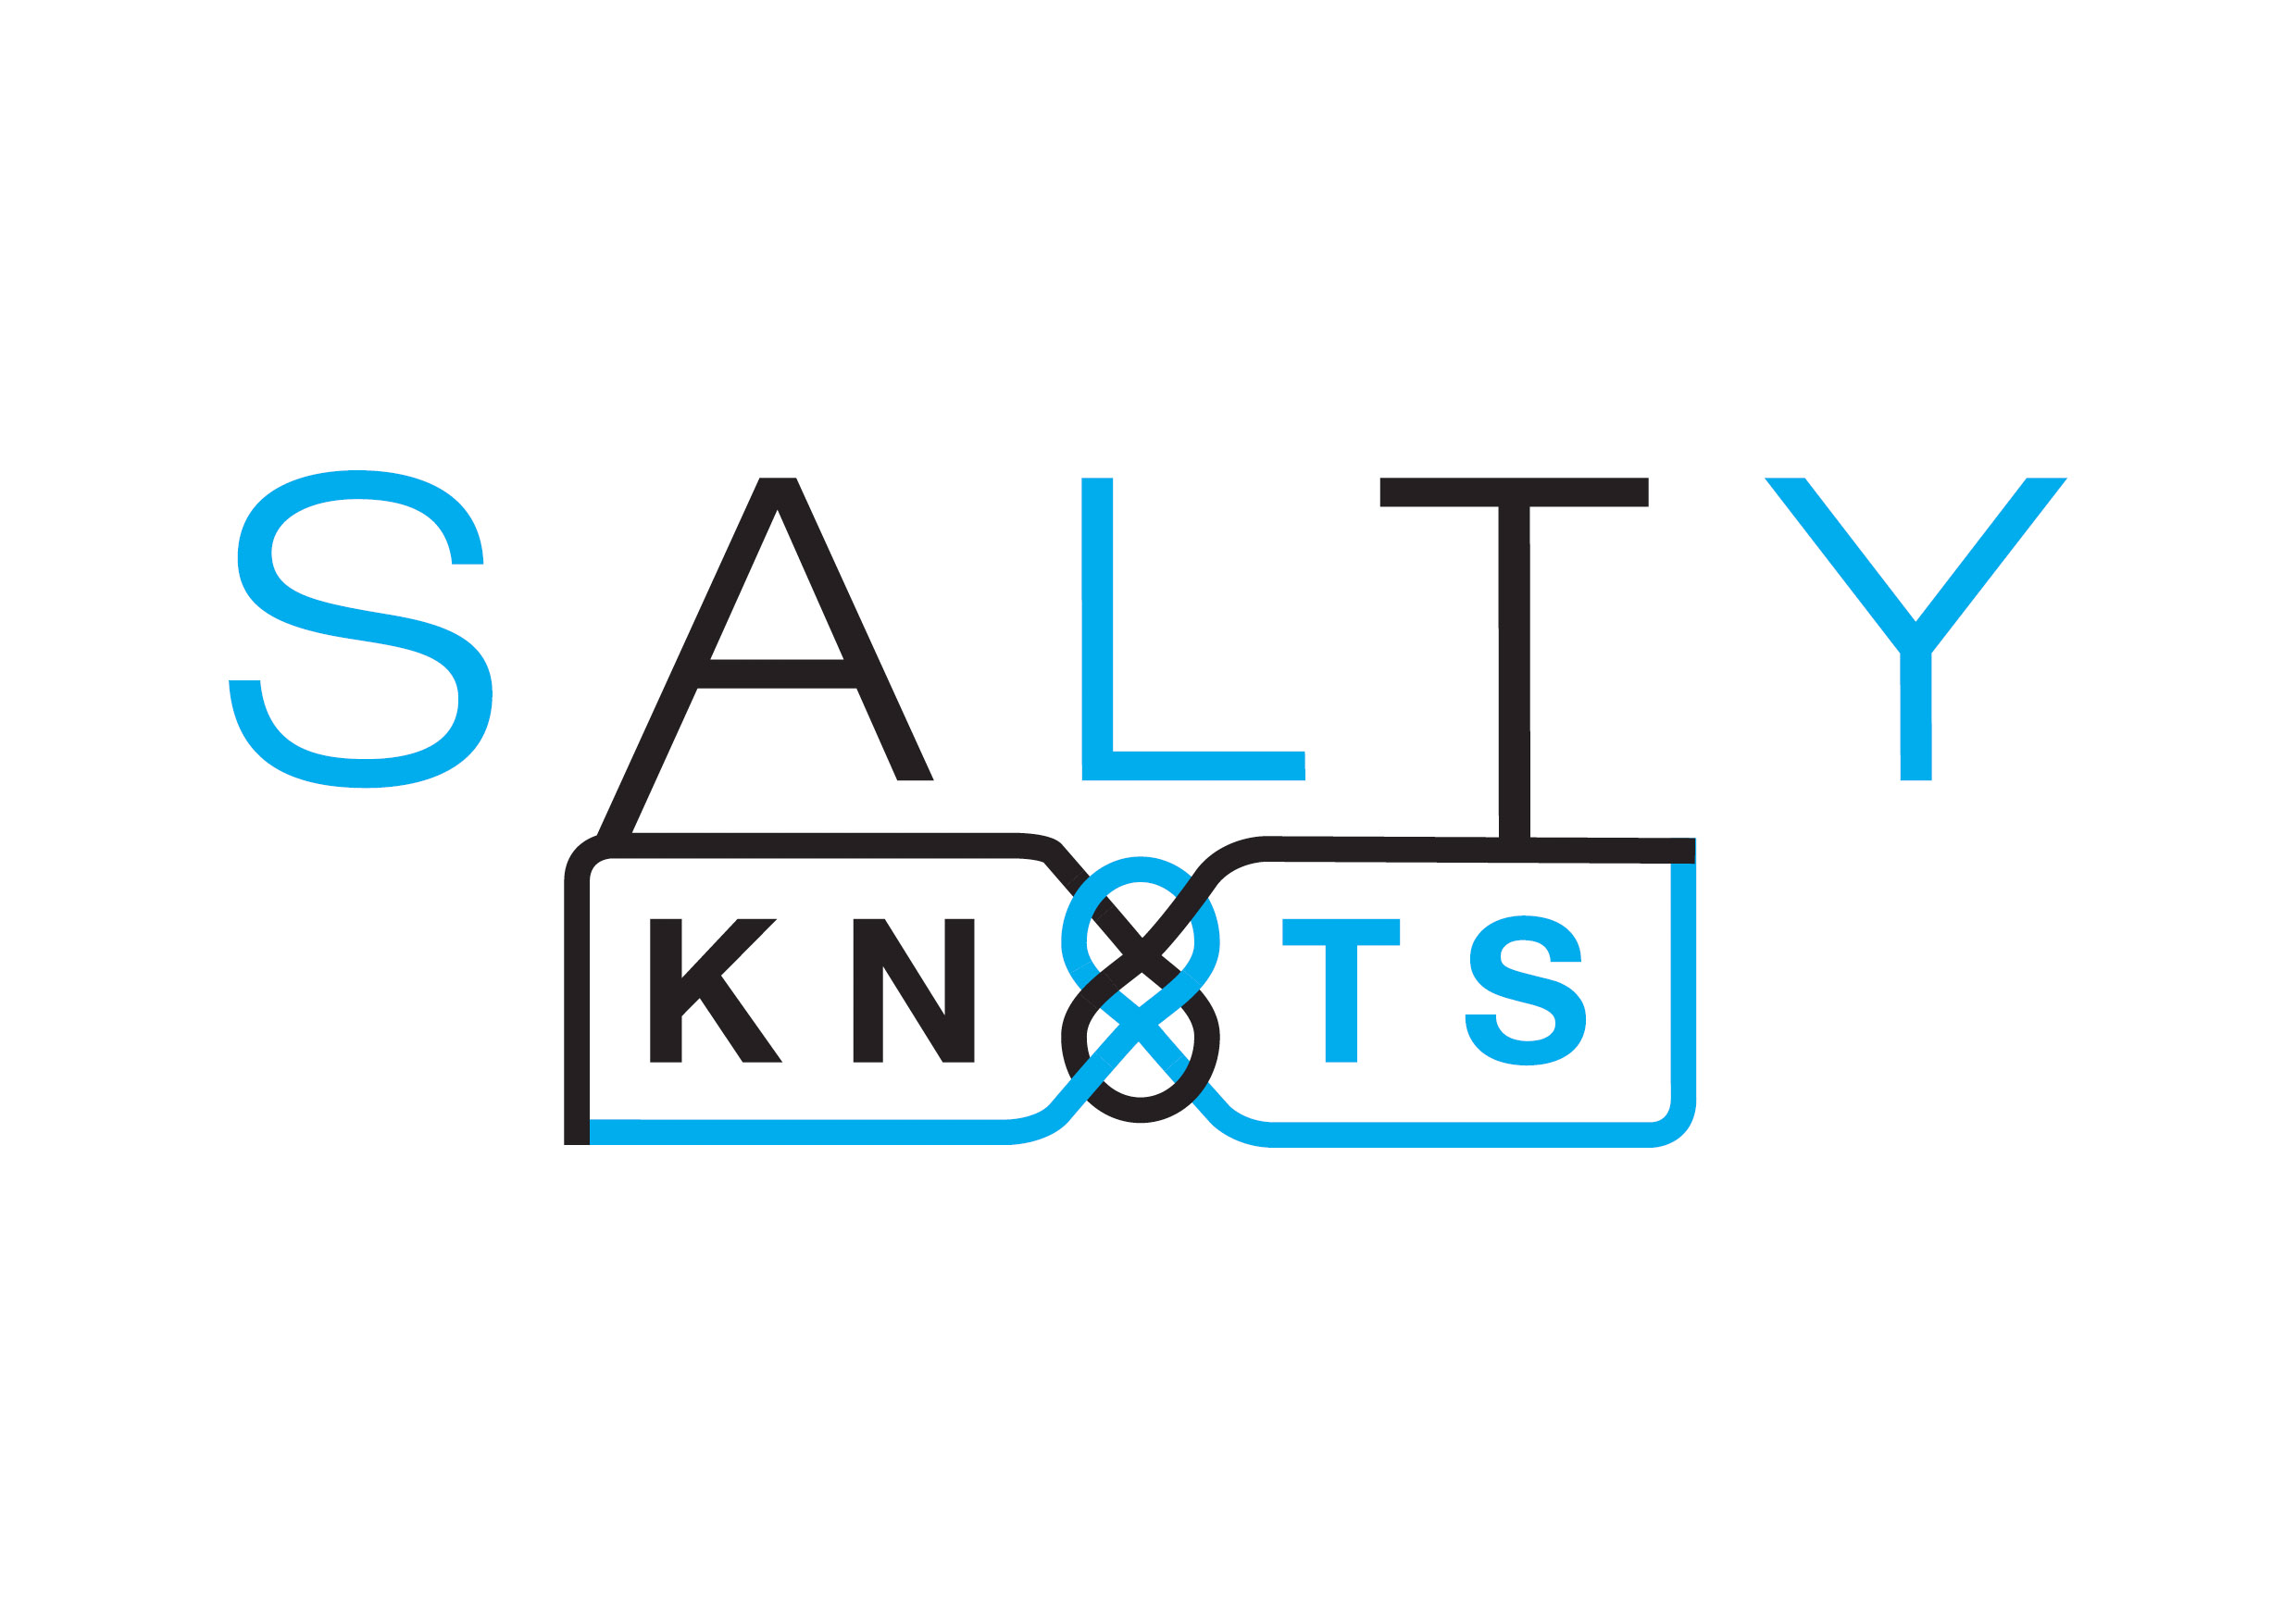 Salty knots